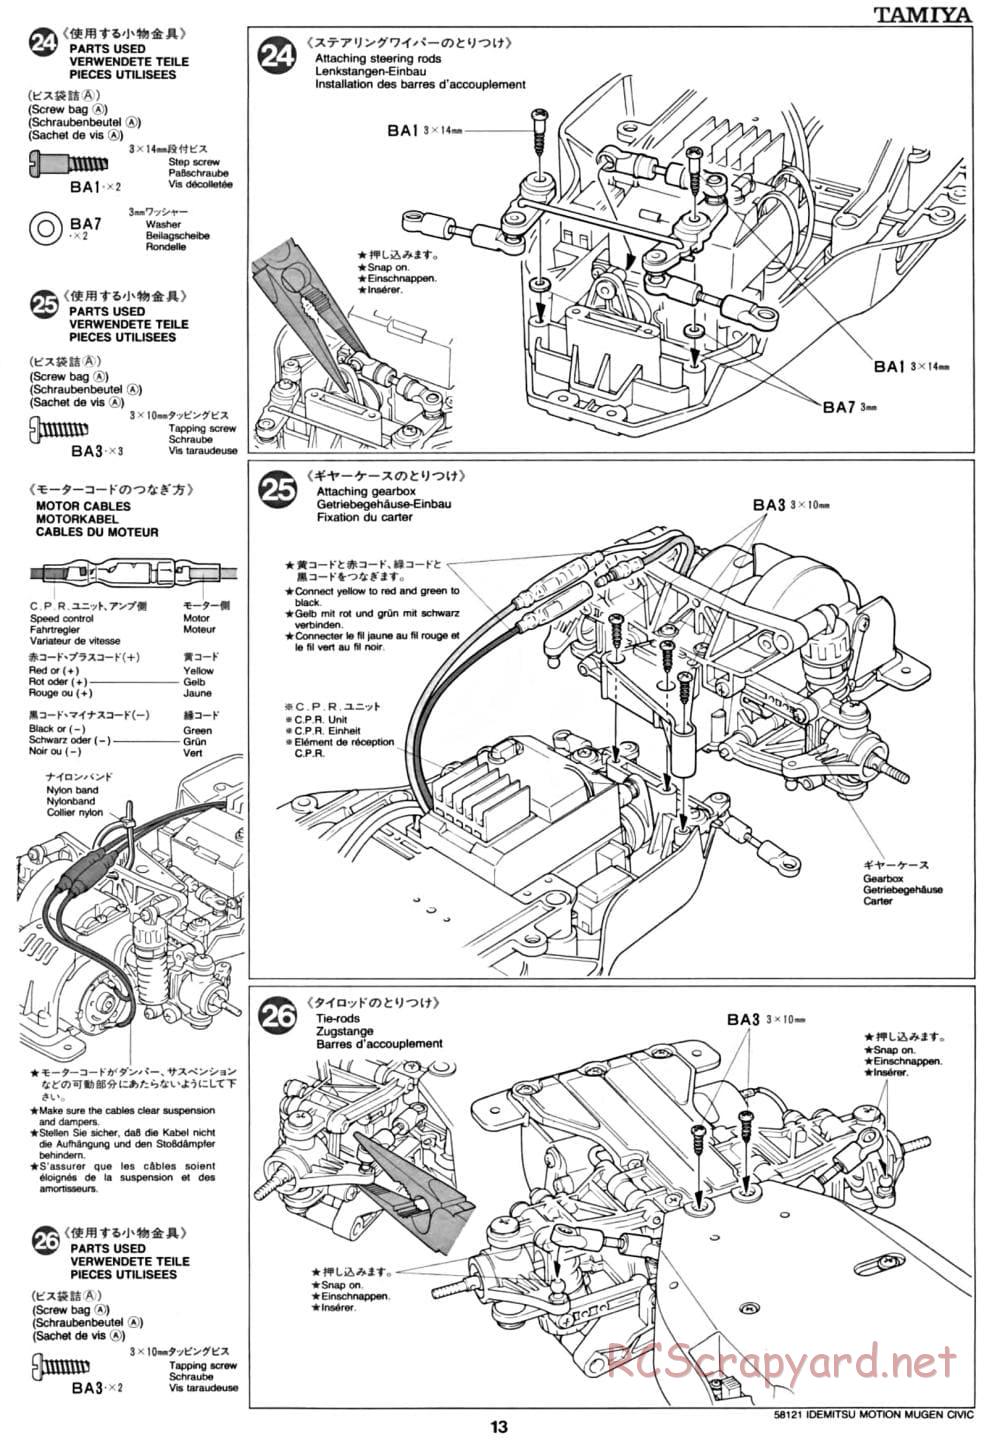 Tamiya - Idemitsu Motion Mugen Civic - FF-01 Chassis - Manual - Page 13